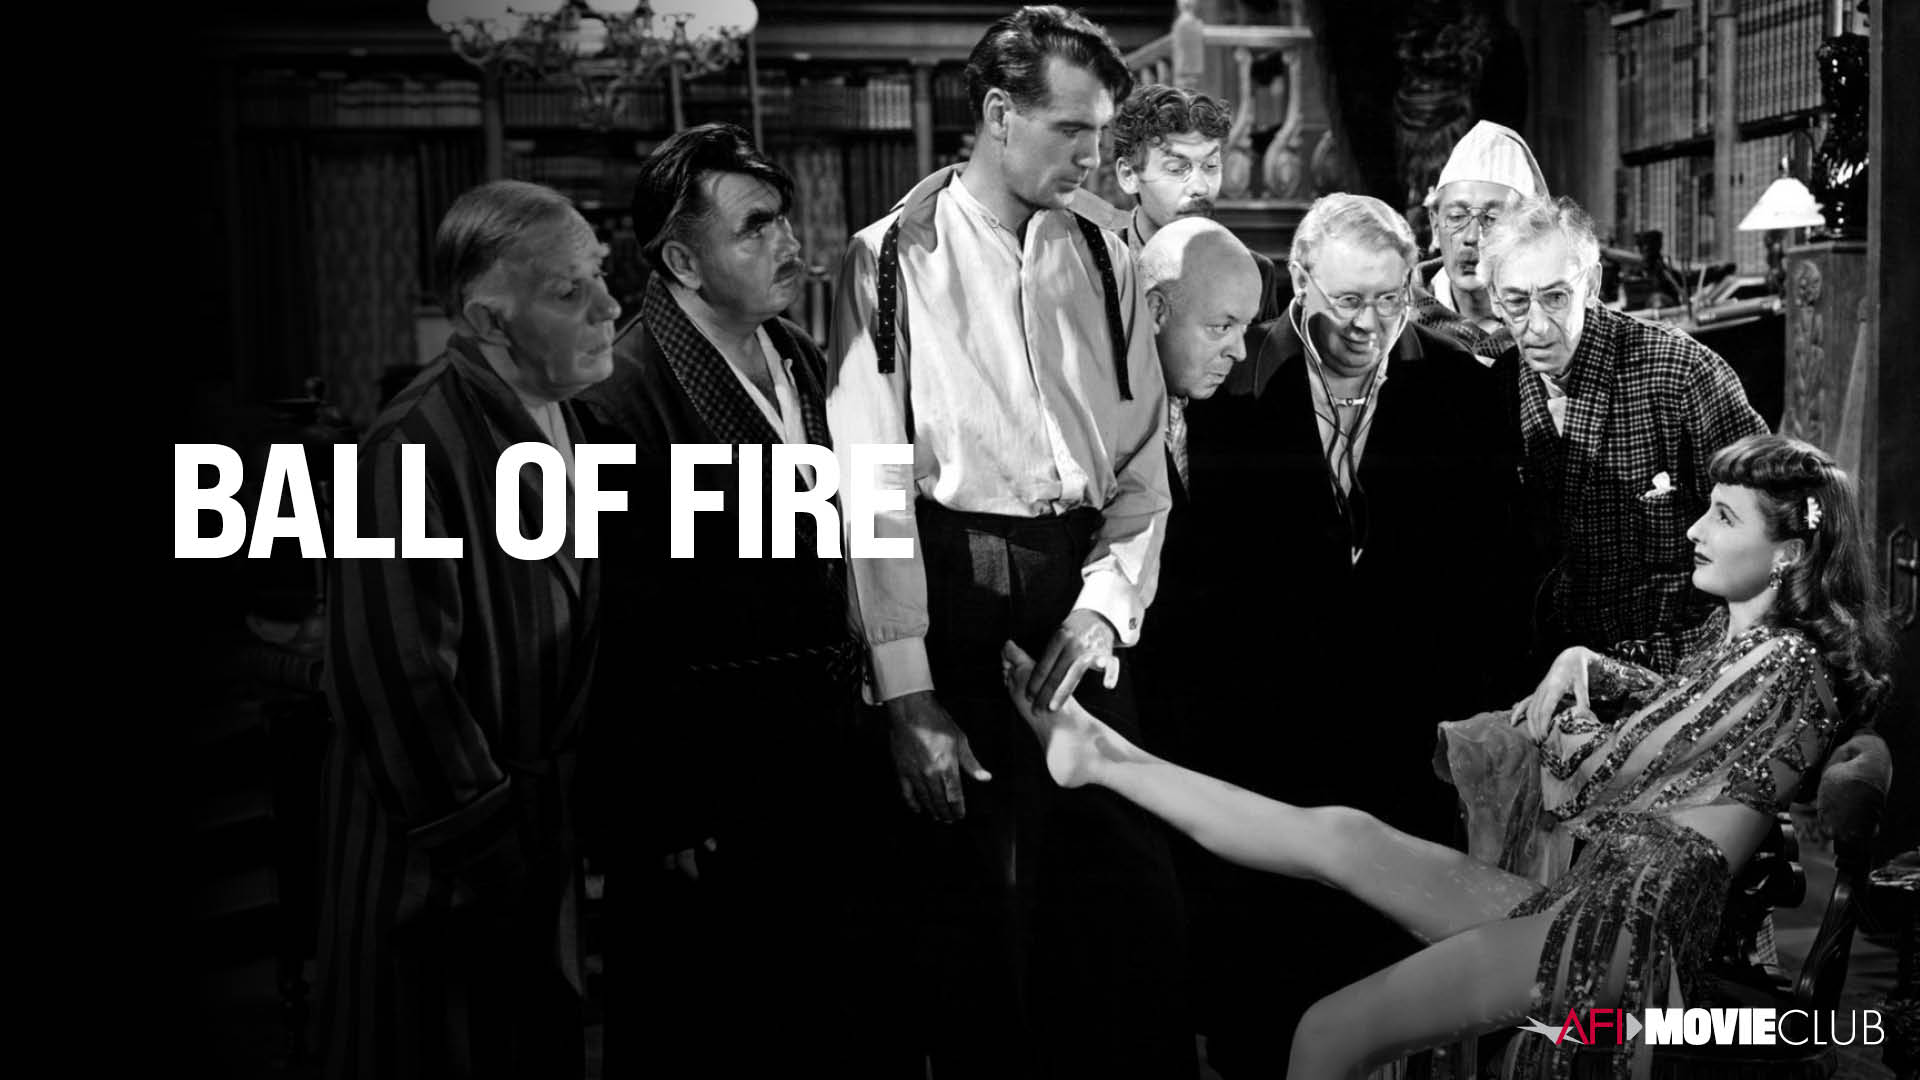 Ball of Fire Film Still - Gary Cooper, Barbara Stanwyck, Richard Haydn, Oskar Homolka, Leonid Kinskey, Tully Marshall, Aubrey Mather, S.Z. Sakall, and Henry Travers